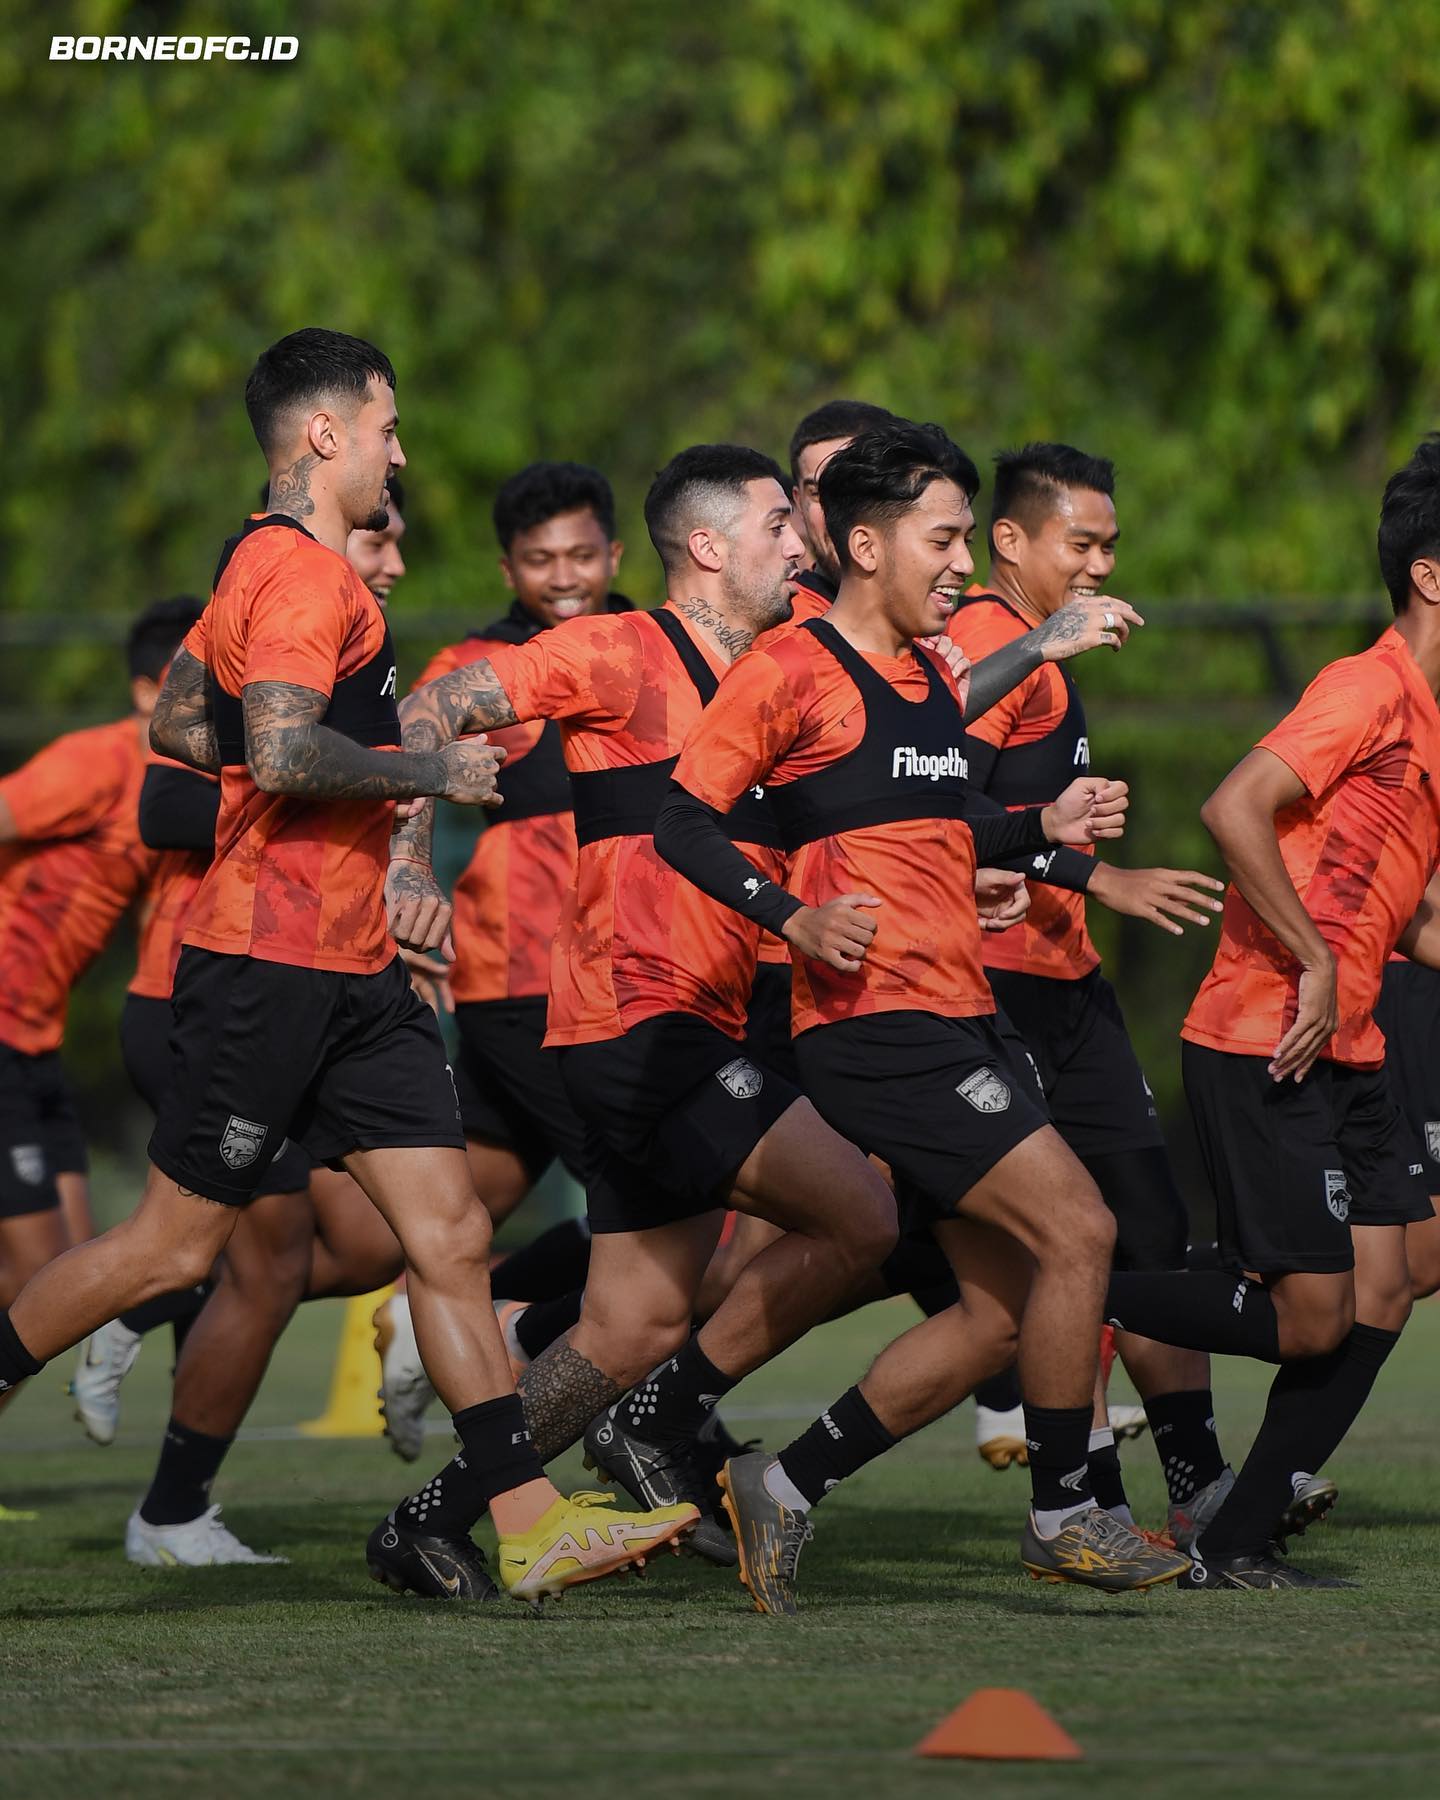 Borneo FC Tunggu Kabar dari 4 Klub untuk Agenda Uji Coba di Yogyakarta